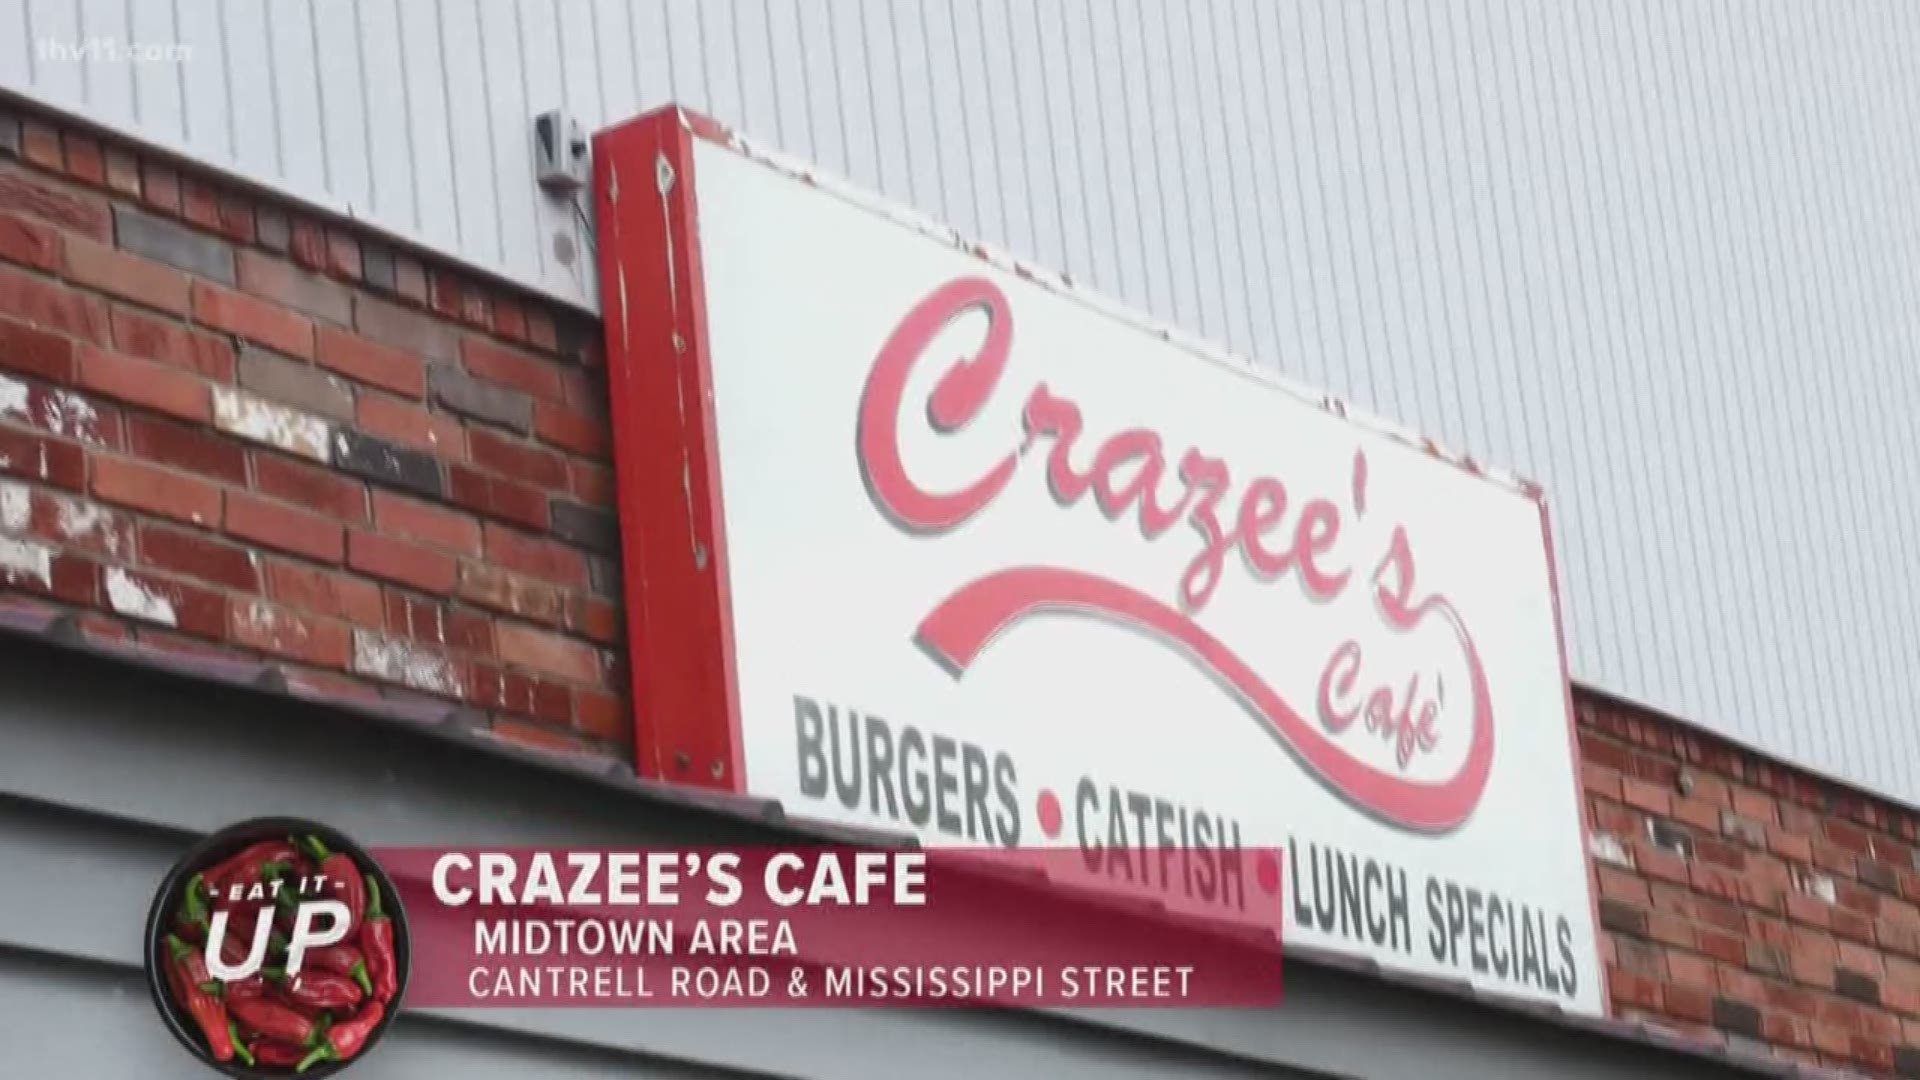 Crazy for Crazee Cafe's catfish | Eat It Up